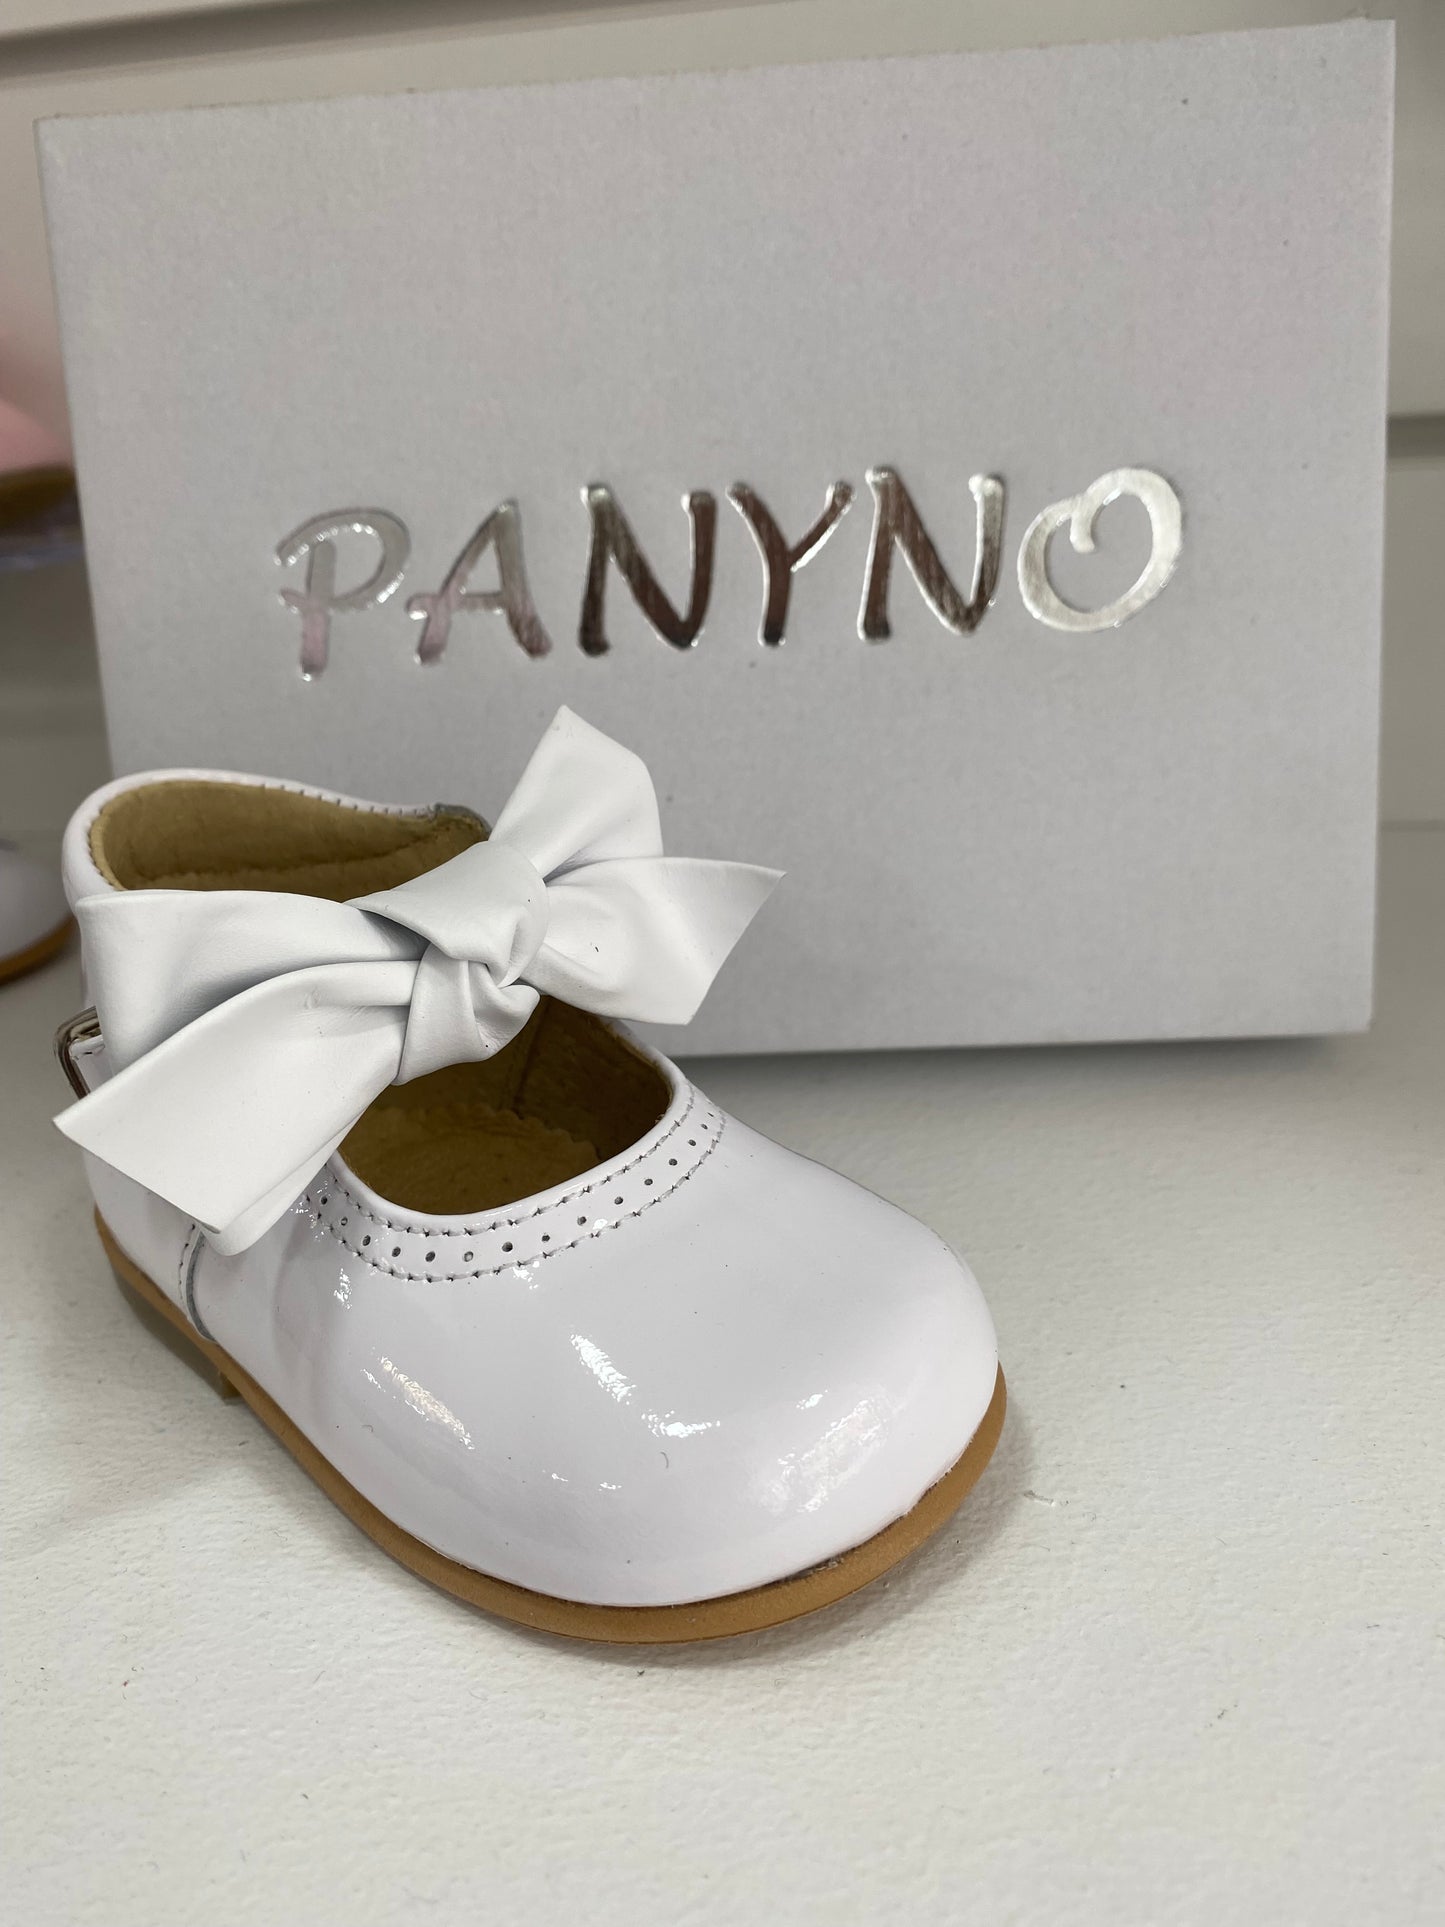 Panyno Girls White Bow Shoes